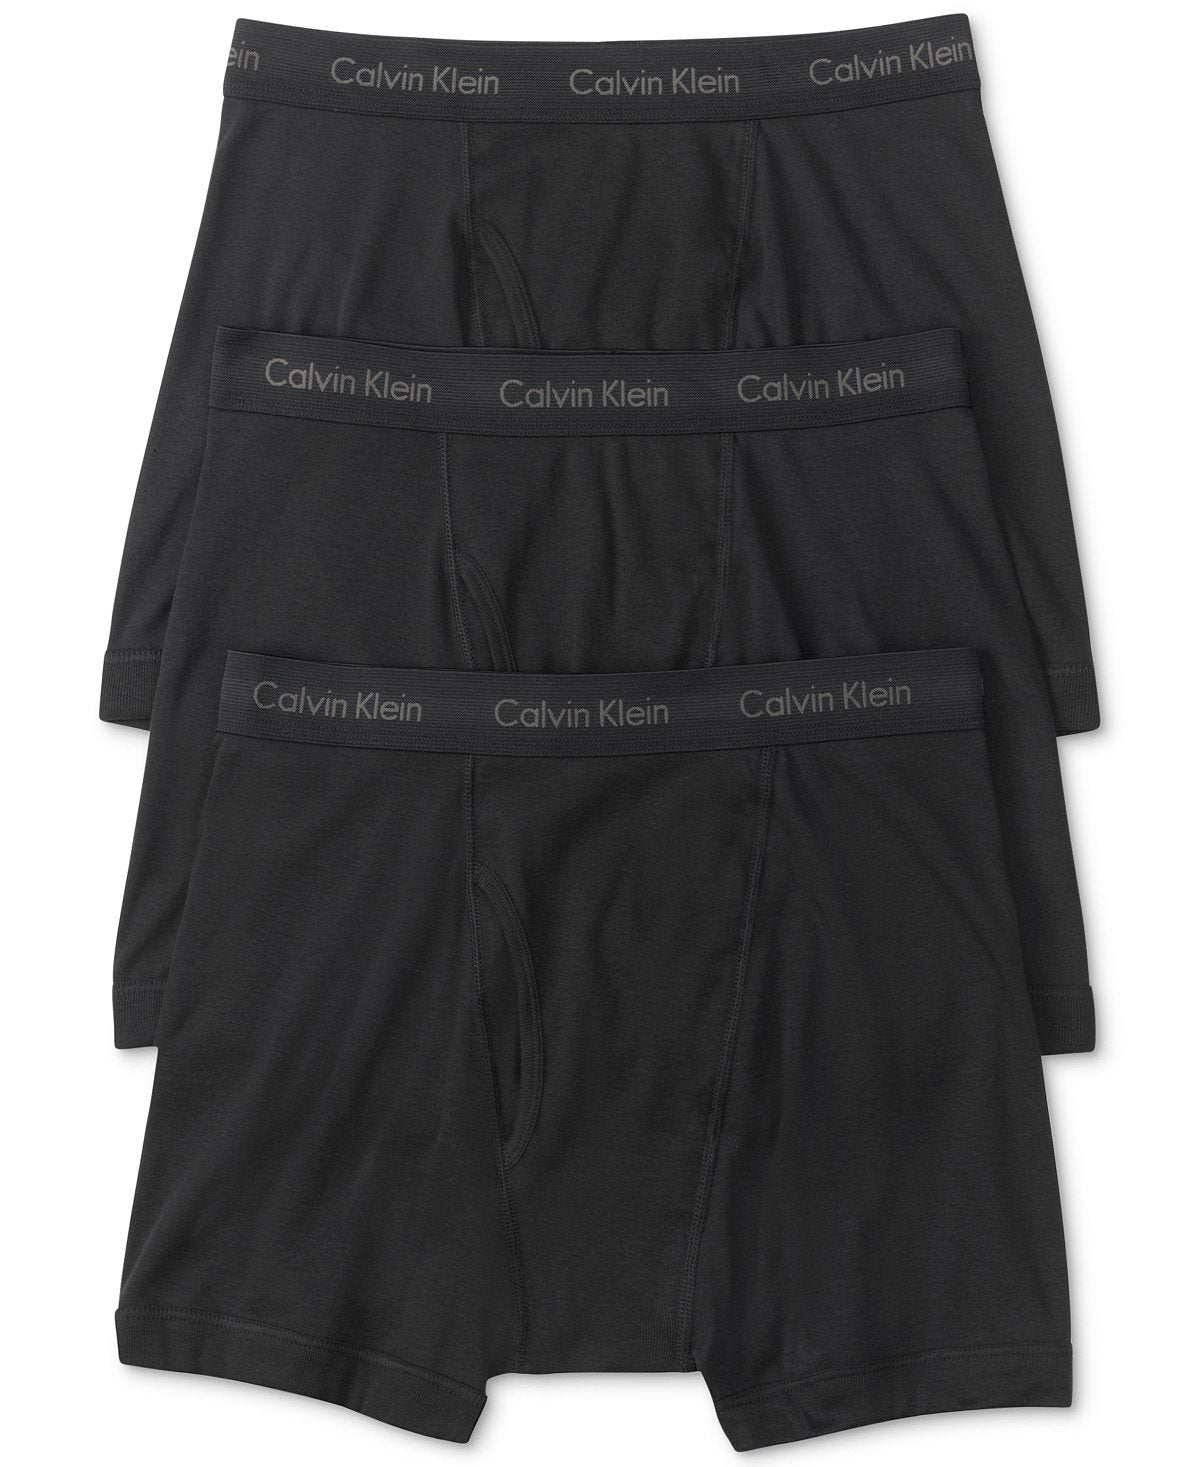 Calvin Klein Cotton Classics Boxer Briefs 3-Pack Grey/Wht/Black NU3019-900  - Free Shipping at LASC